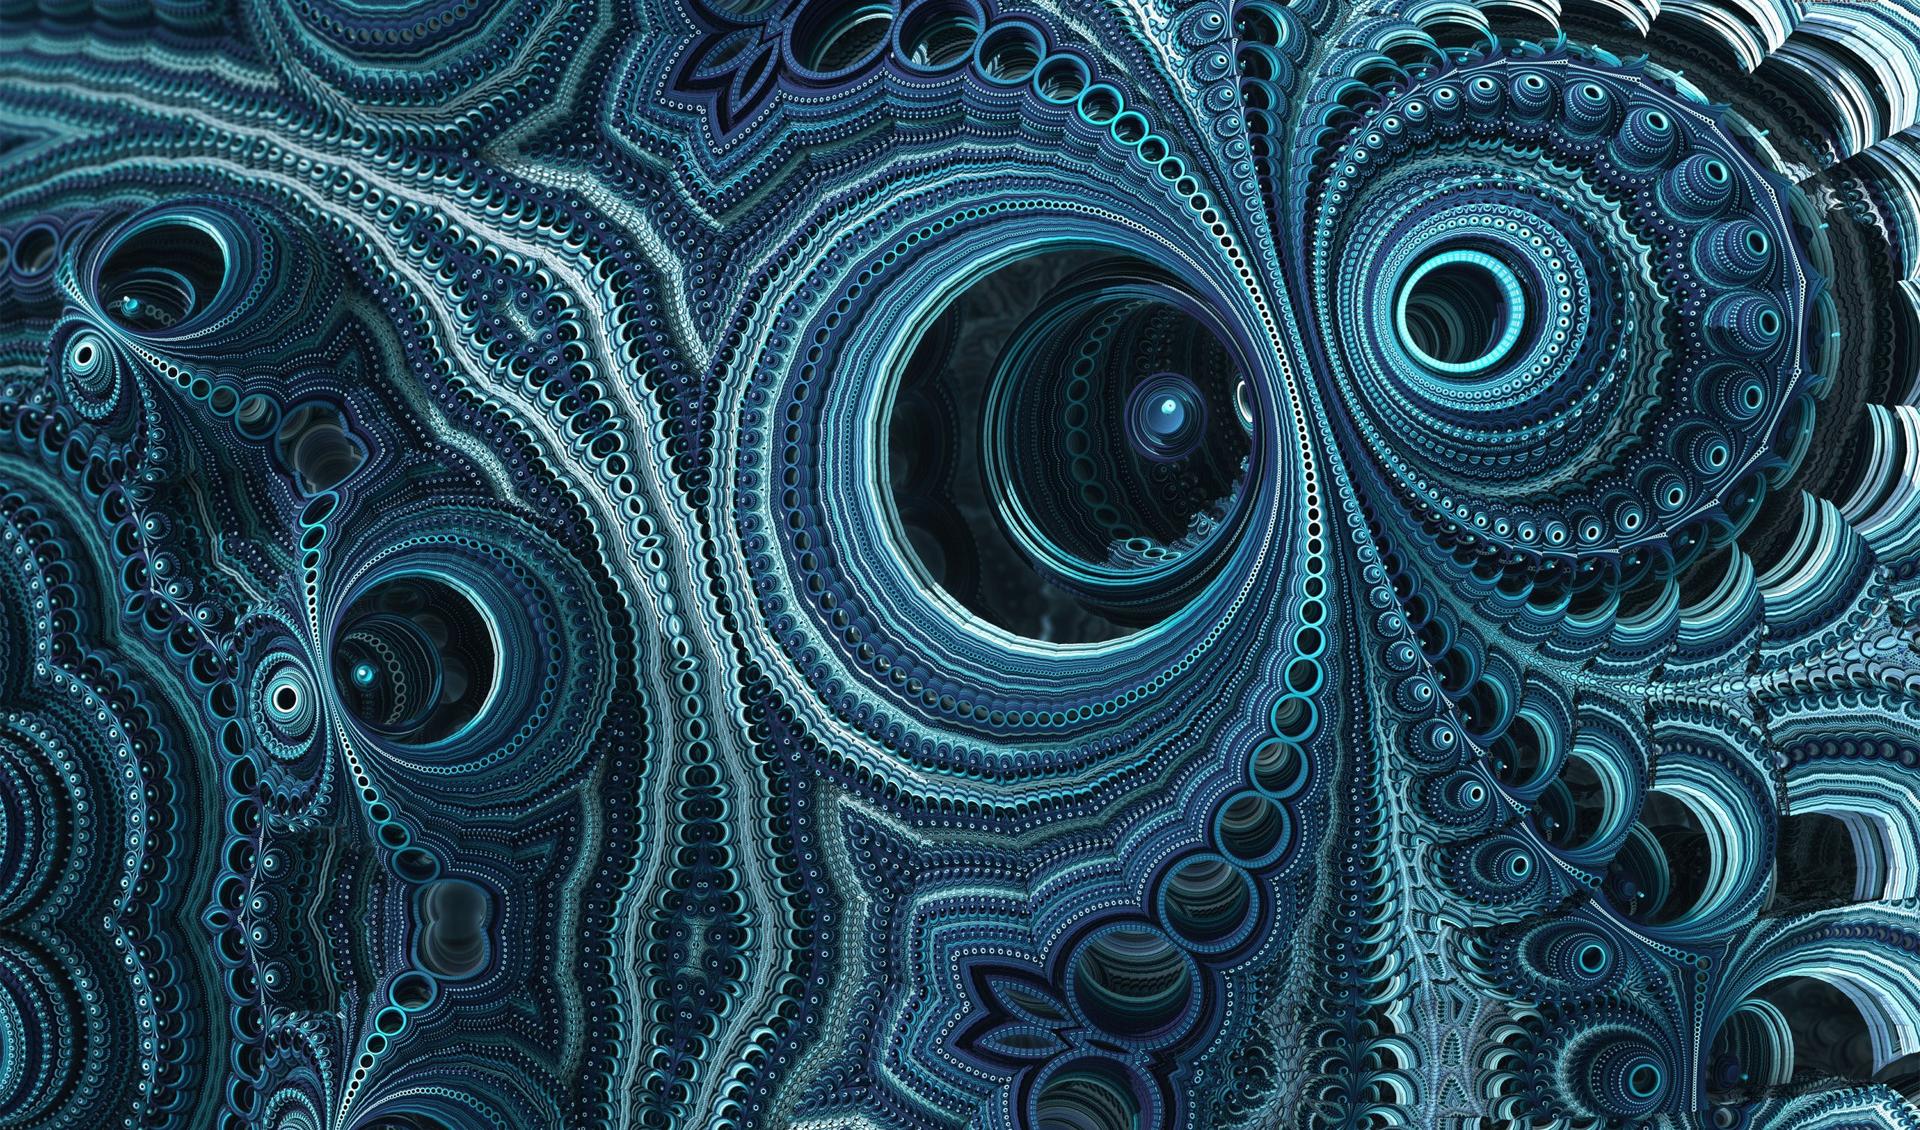 Blue fractal swirls at 1024 x 1024 iPad size wallpapers HD quality